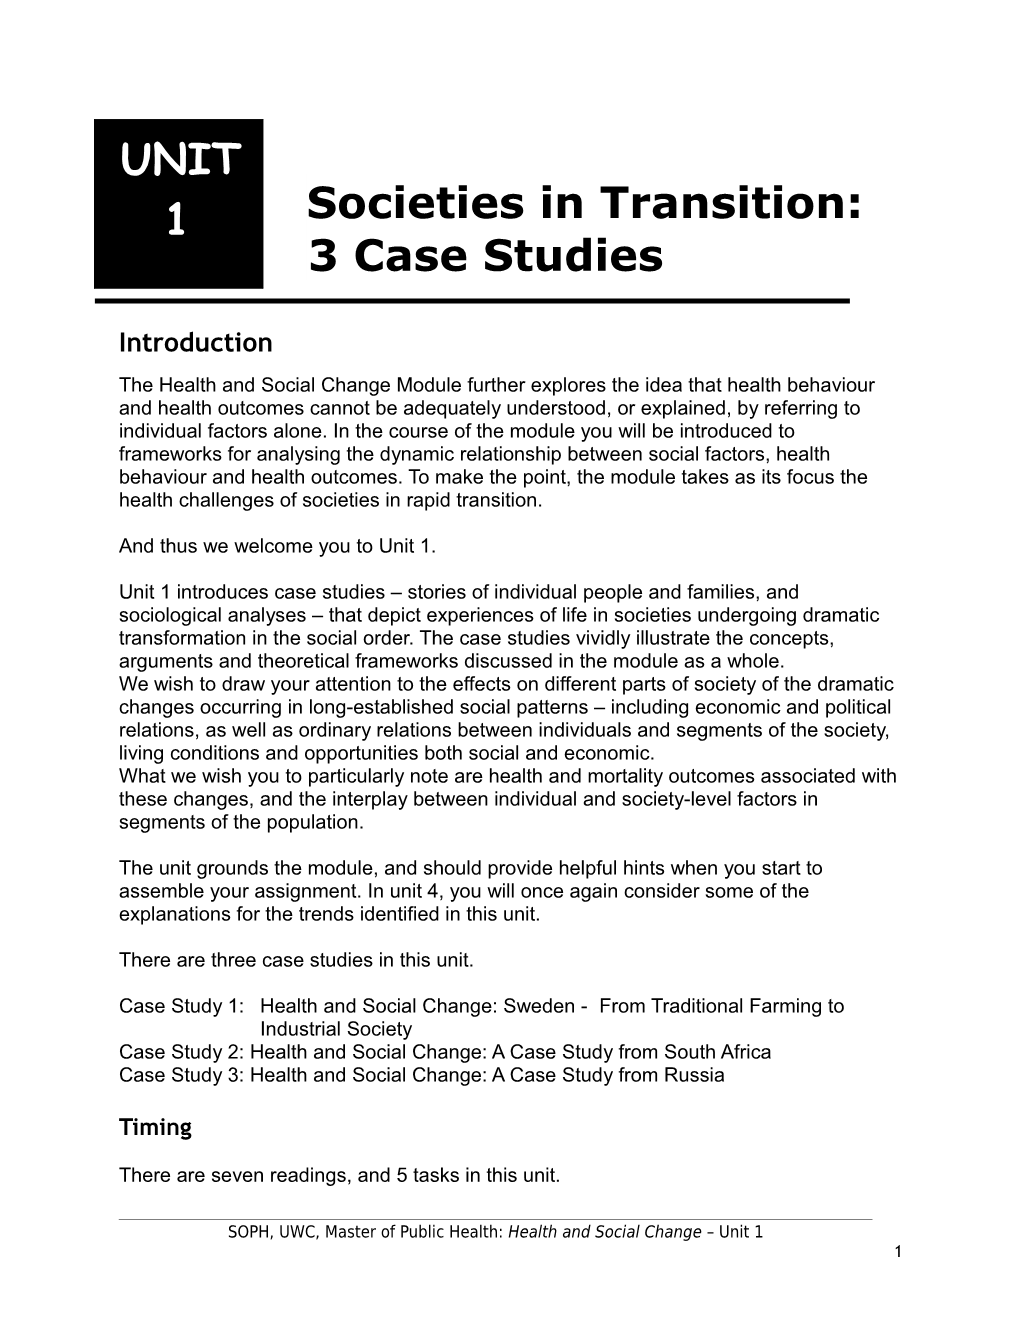 Societies in Transition: 3 Case Studies